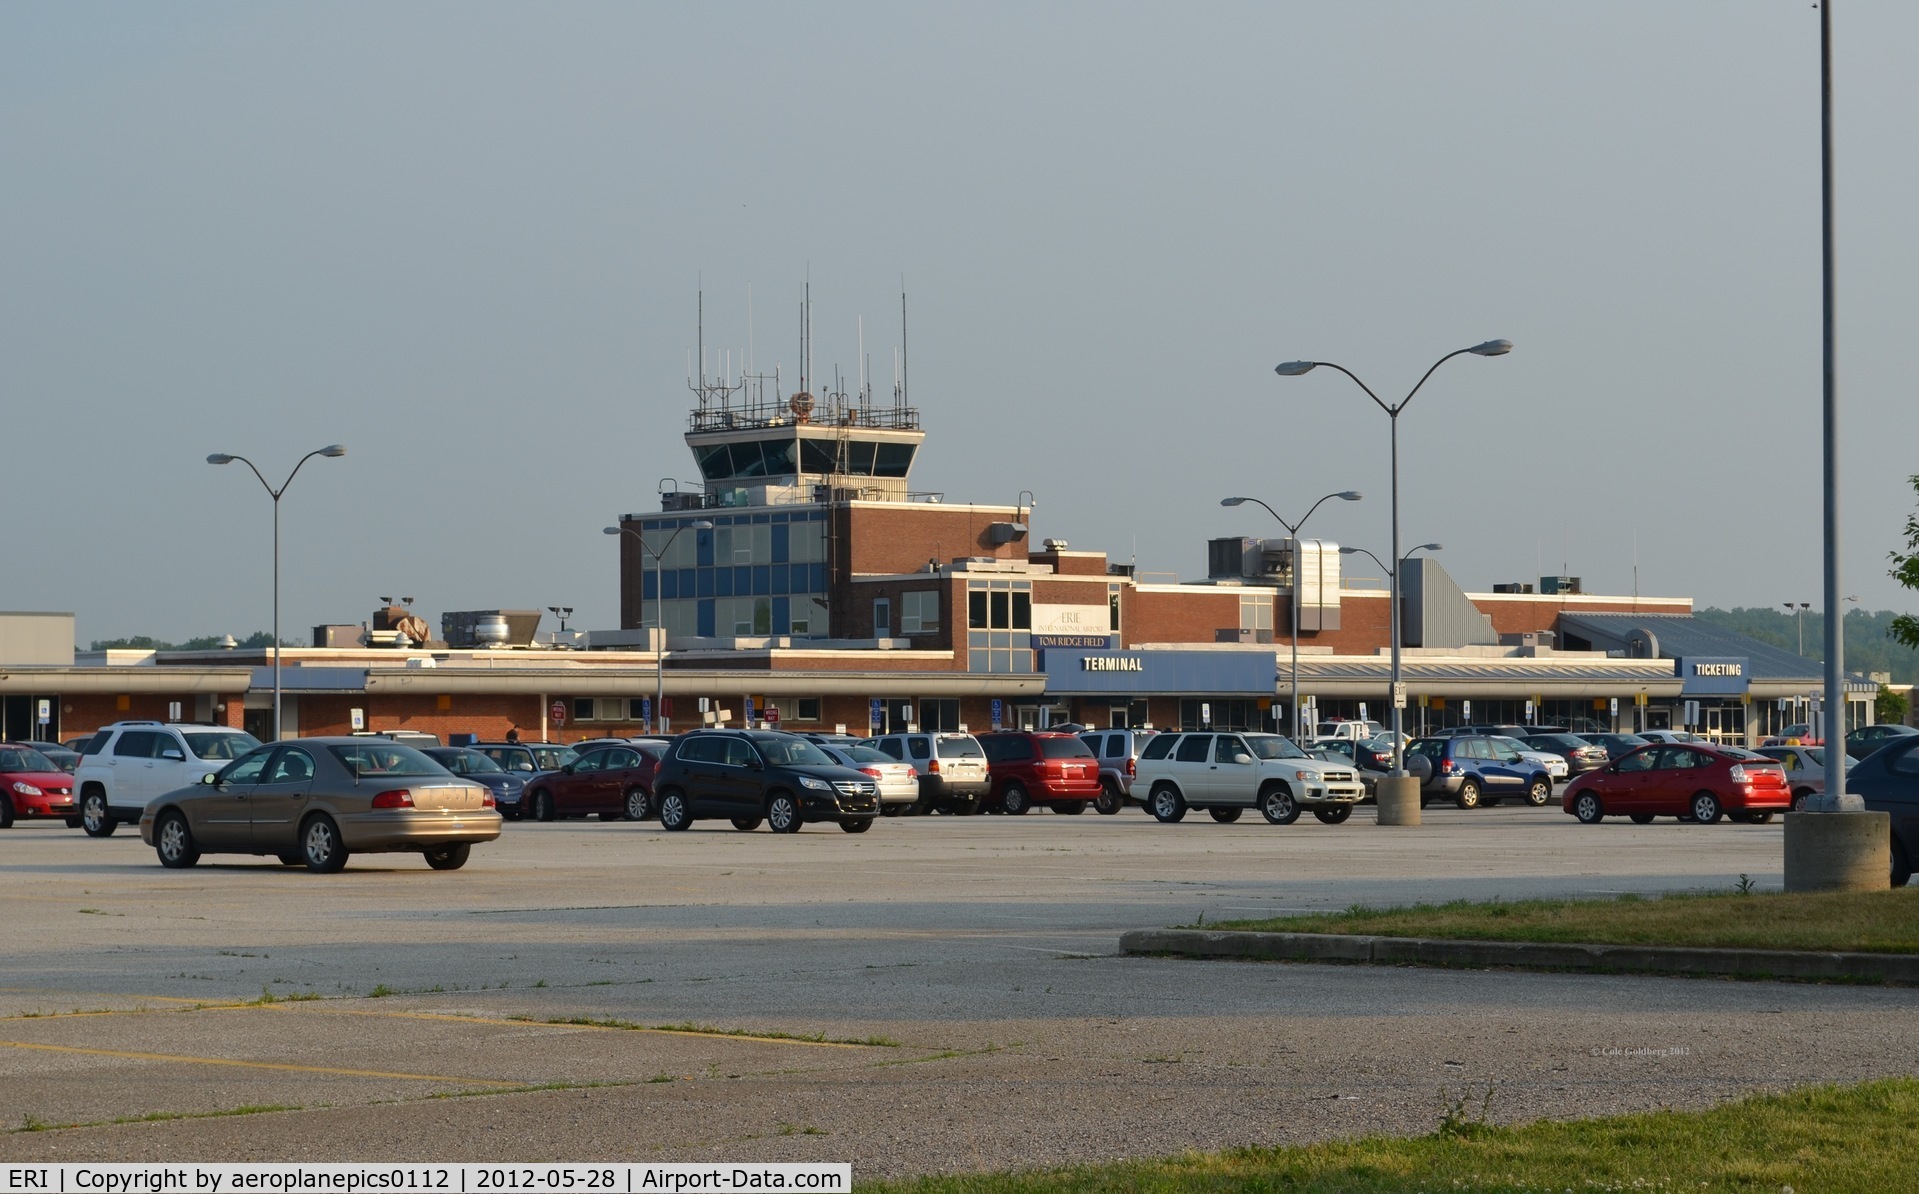 Erie Intl/tom Ridge Field Airport (ERI) - The Terminal and Air Traffic Control Tower at Erie International Airport / Tom Ridge Field in Erie, Pennsylvania. 